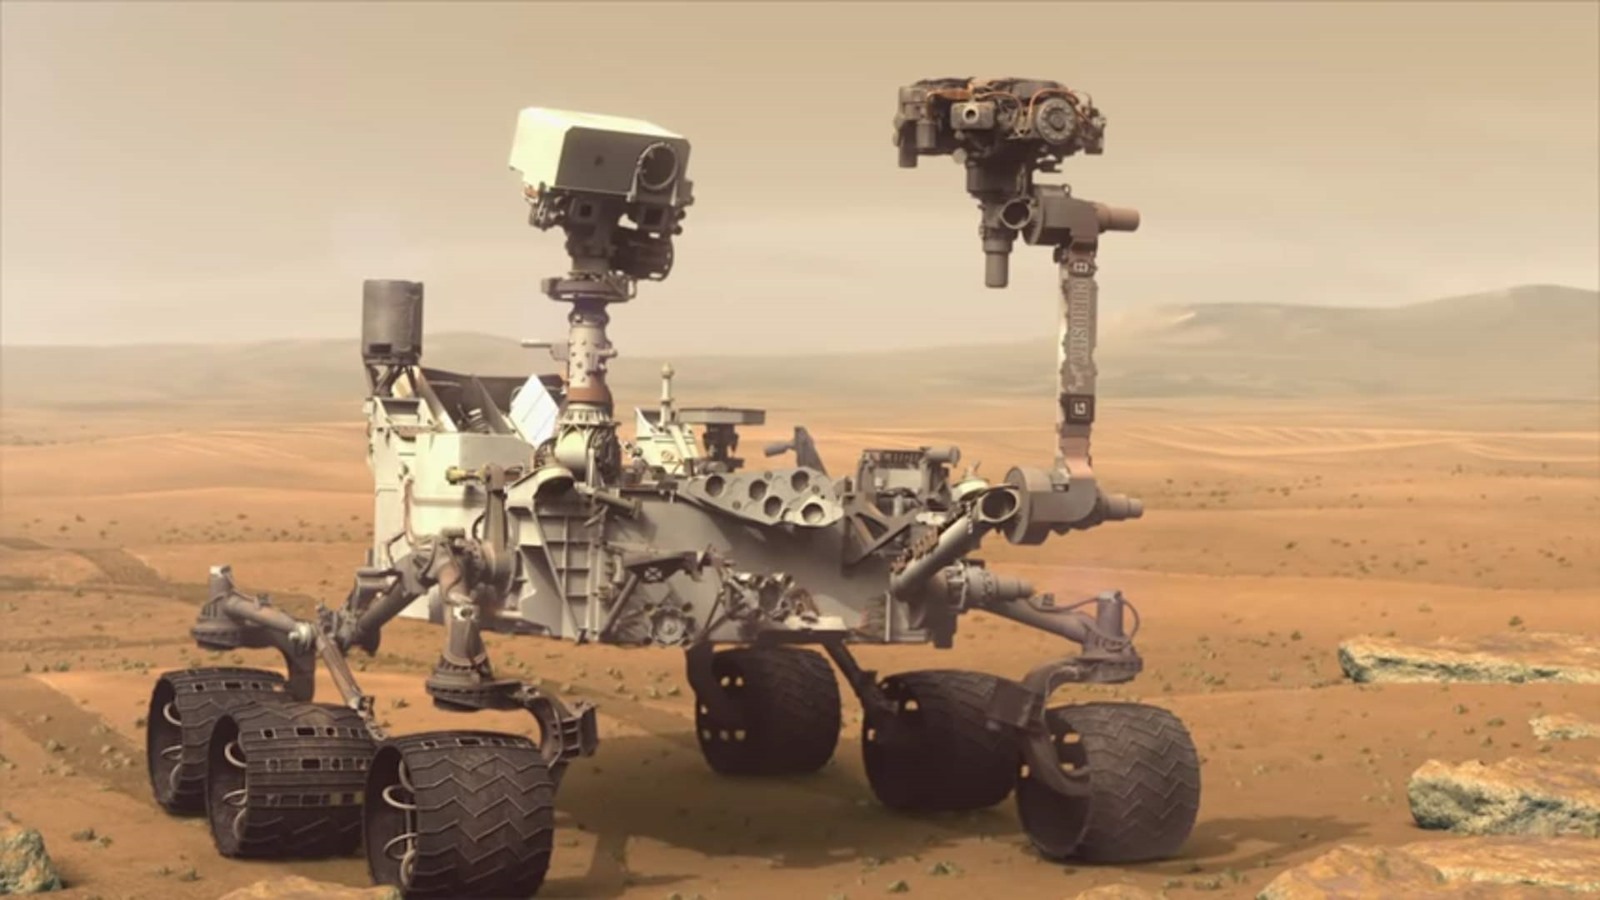 Astromobile Curiosity de la NASA (www.gurumed.org)